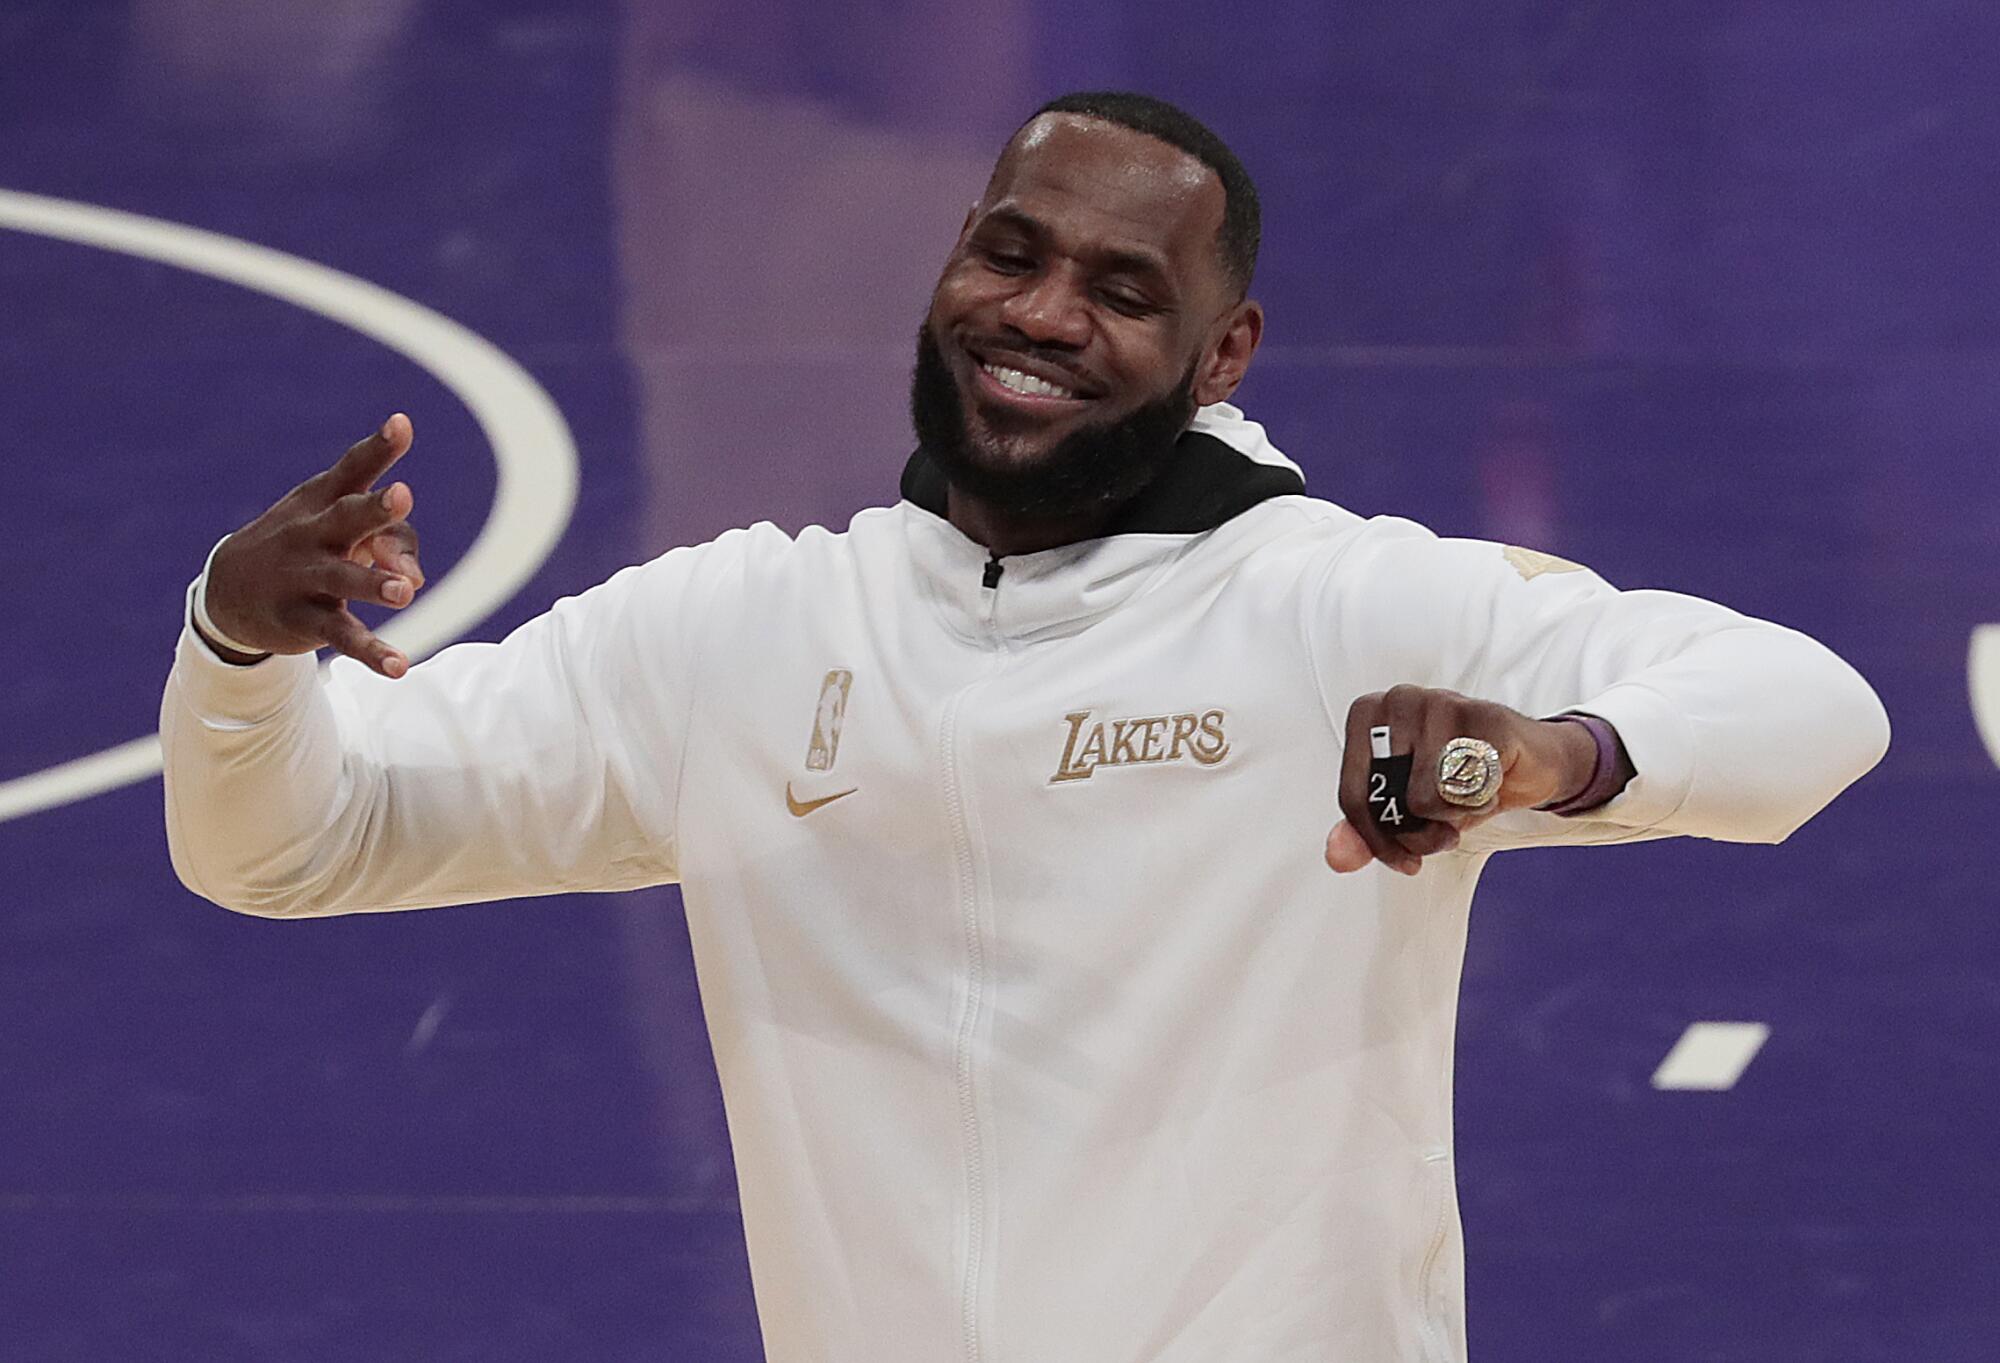 Lakers forward LeBron James celebrates after receiving his 2020 NBA championship ring.